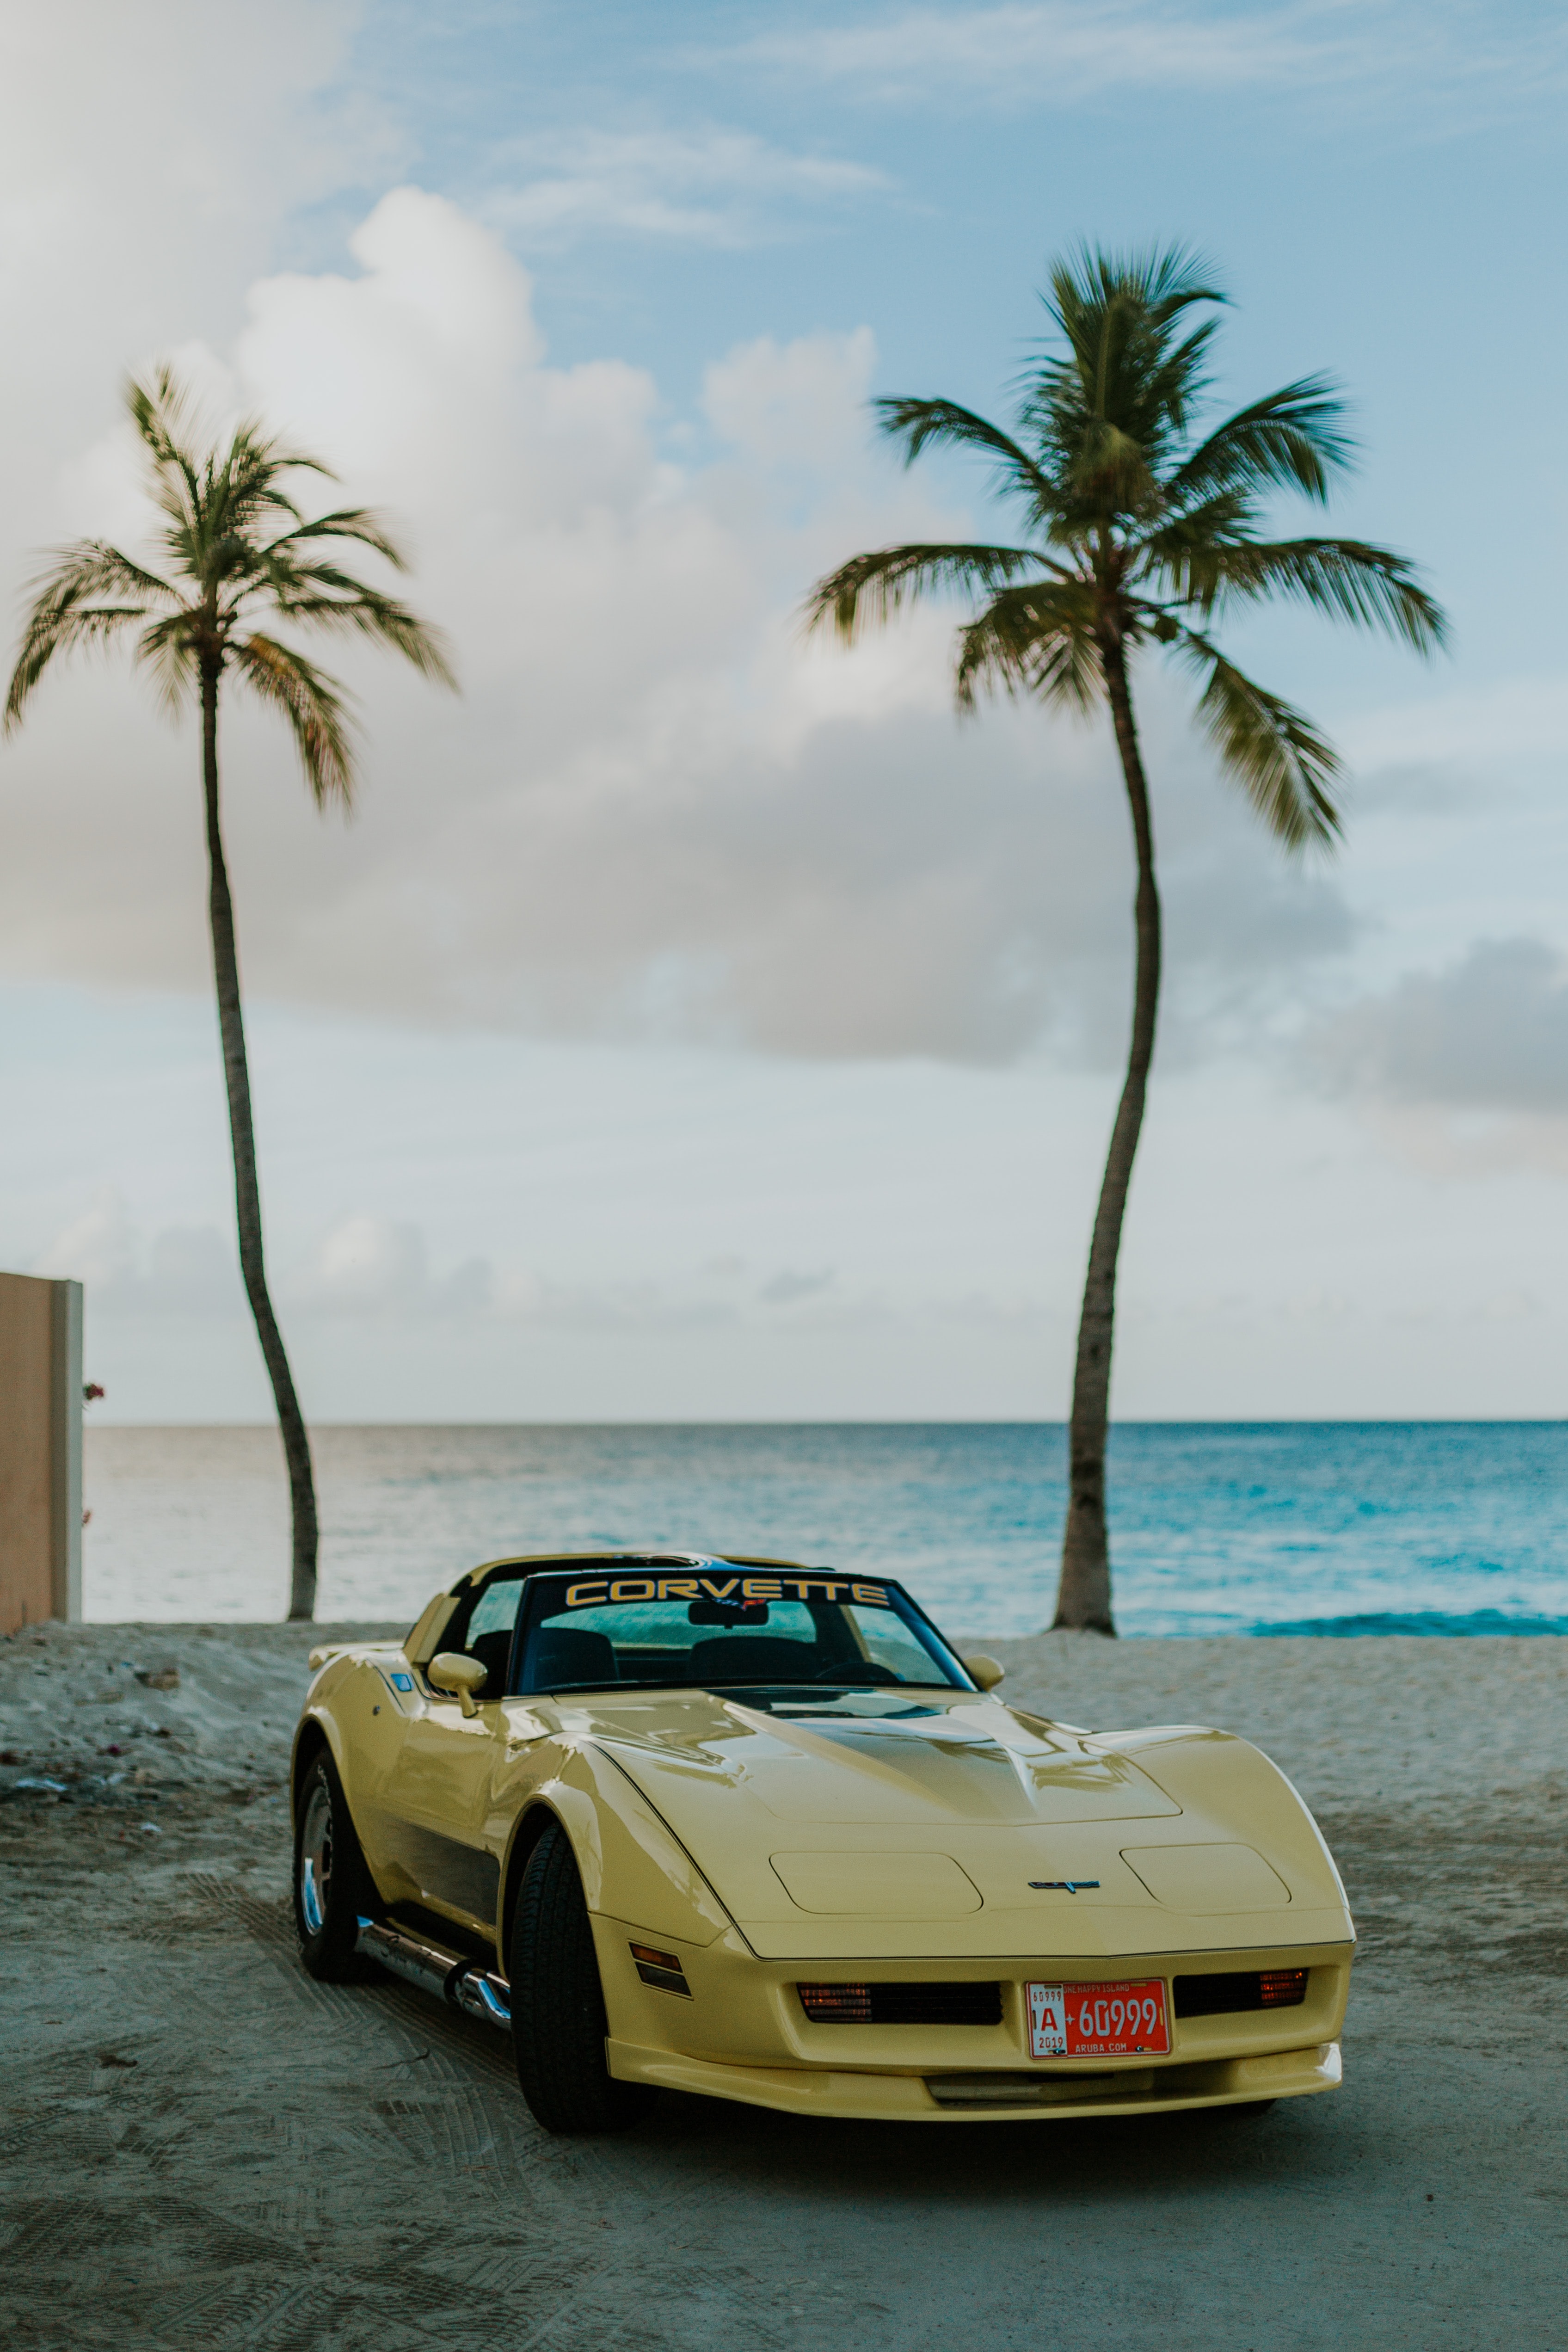 chevrolet corvette, chevrolet, retro, beach, cars, yellow, car